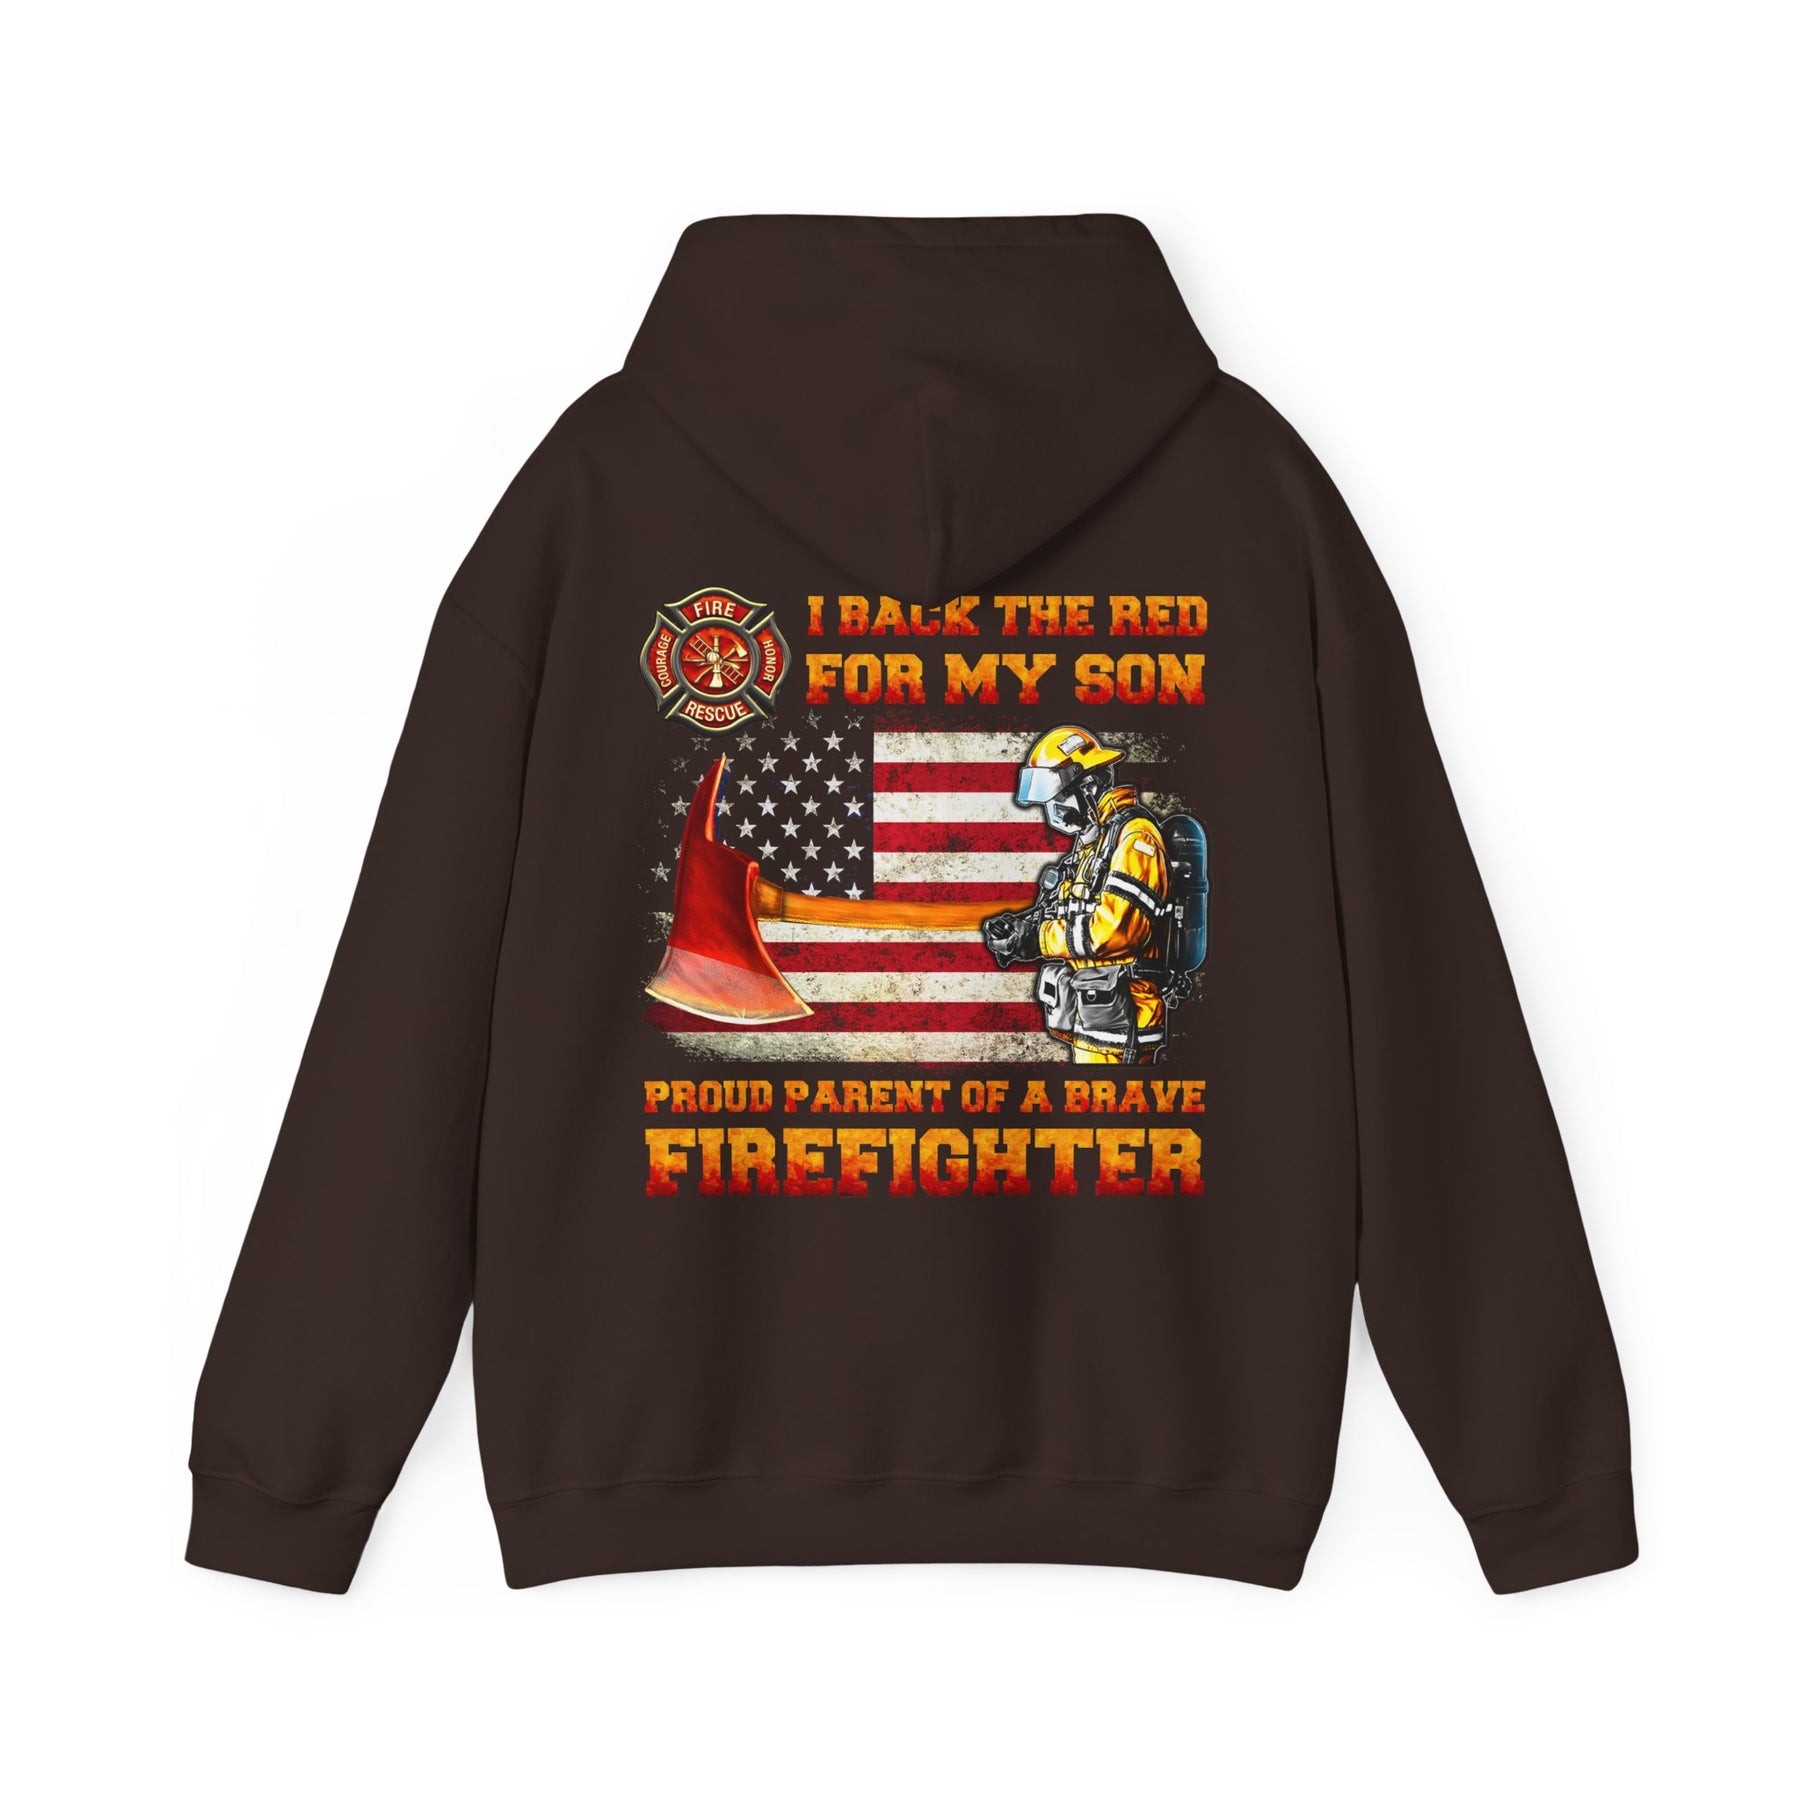 Firefighter Hoodies / Proud Firefighter Hoodies